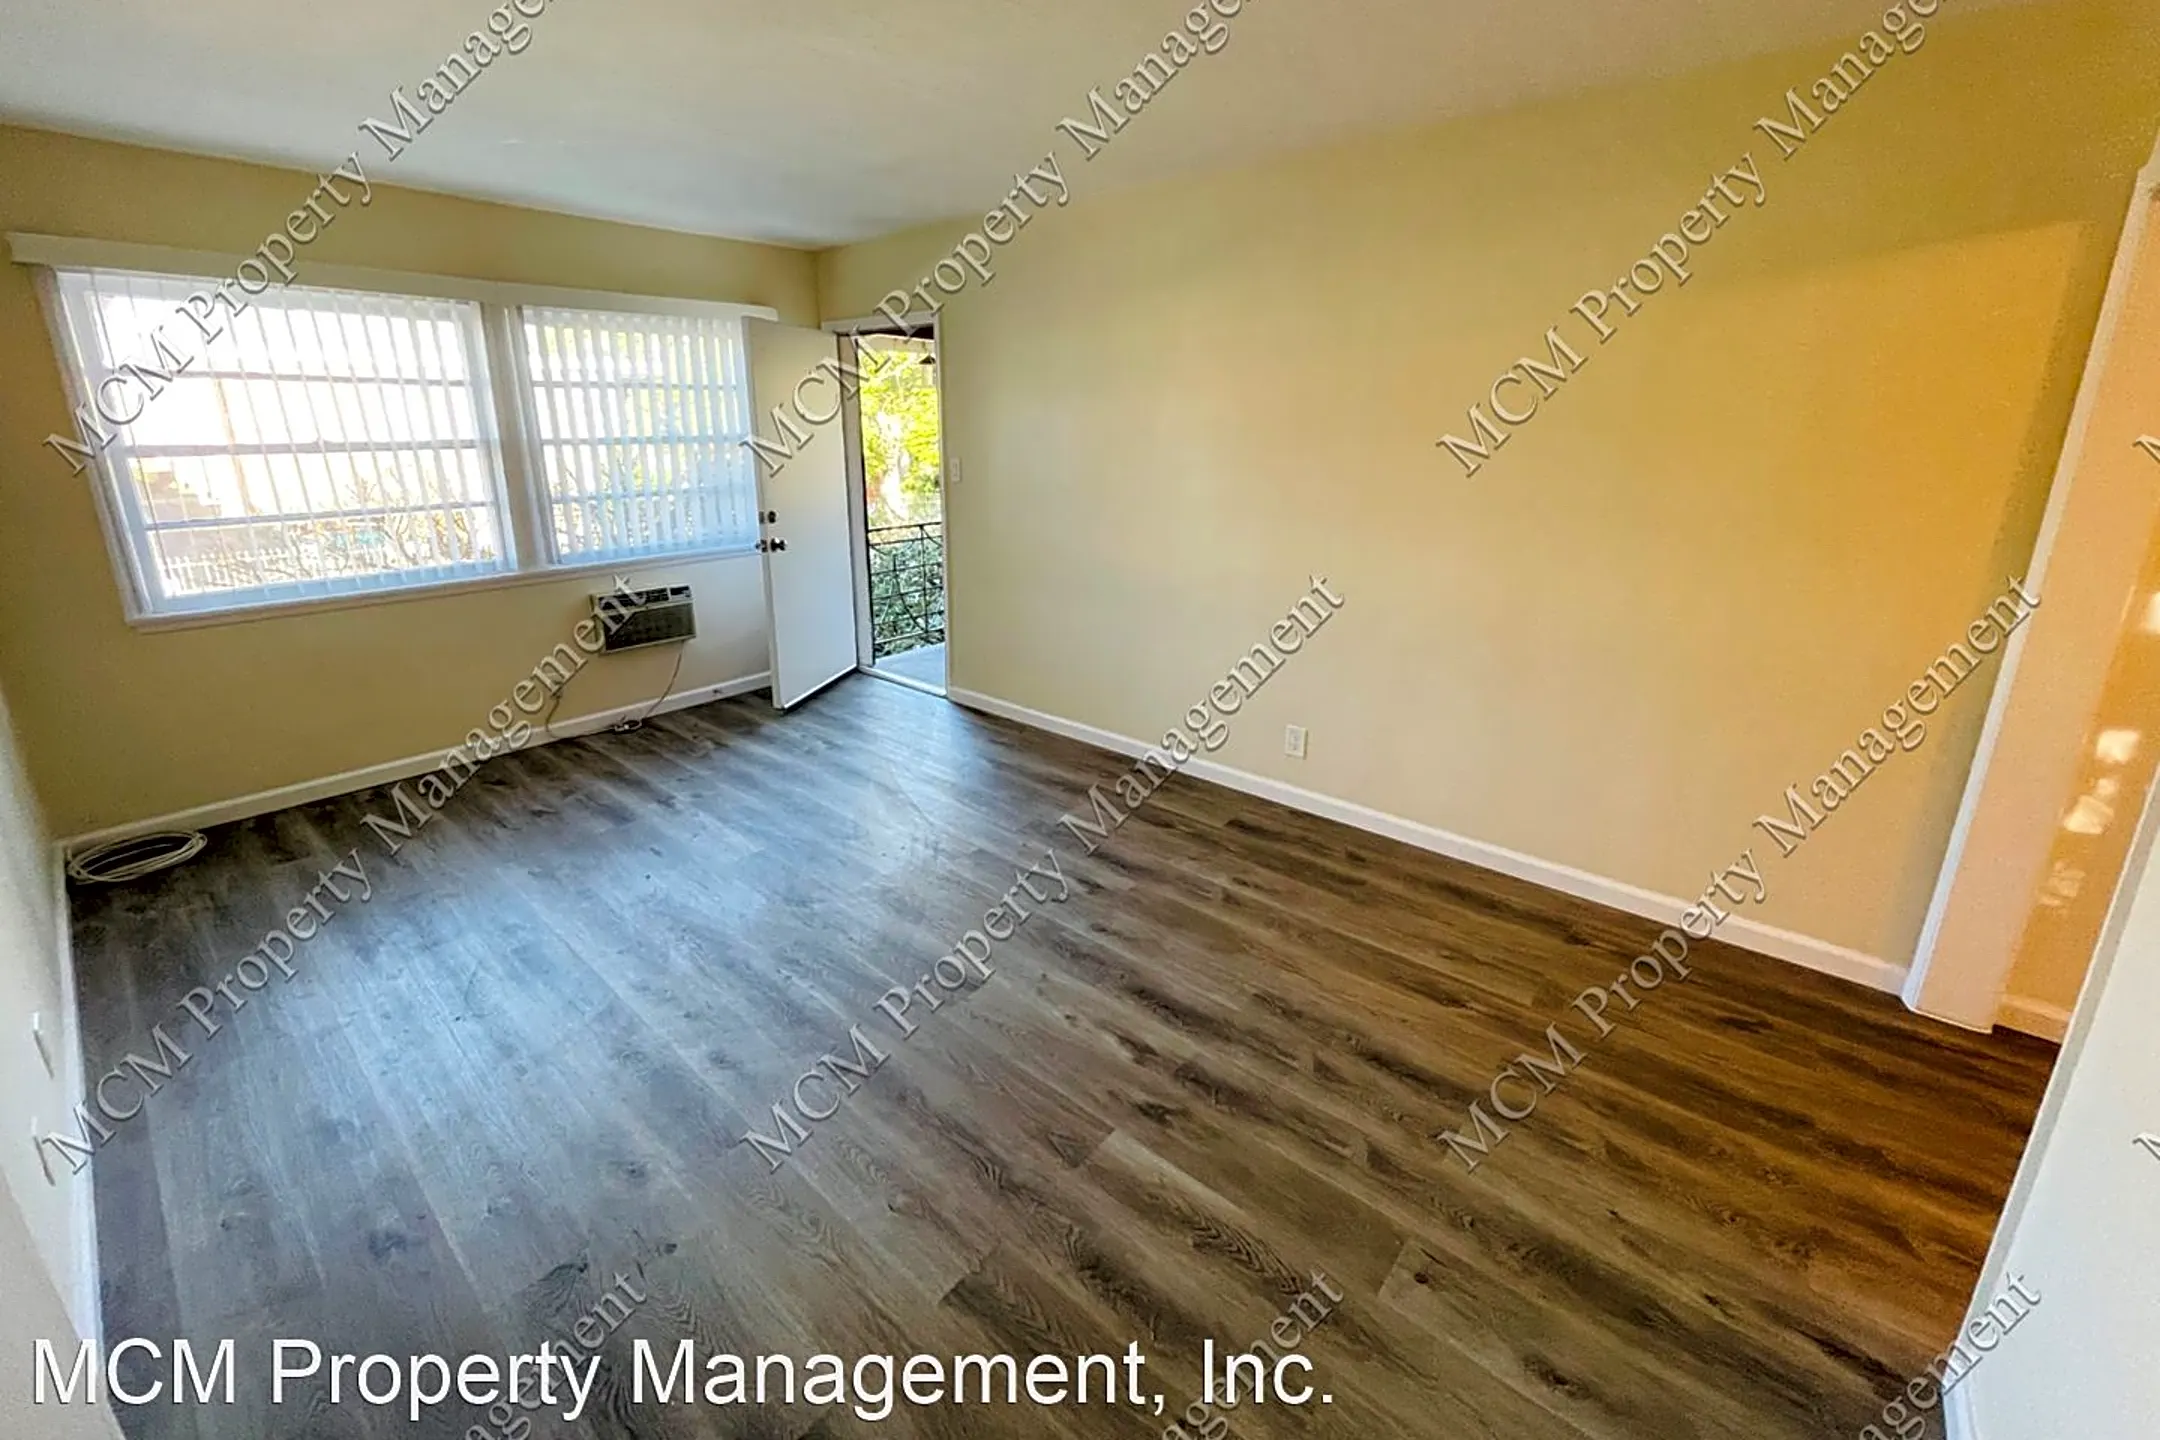 Living Room - 14758 Blythe St - Los Angeles, CA